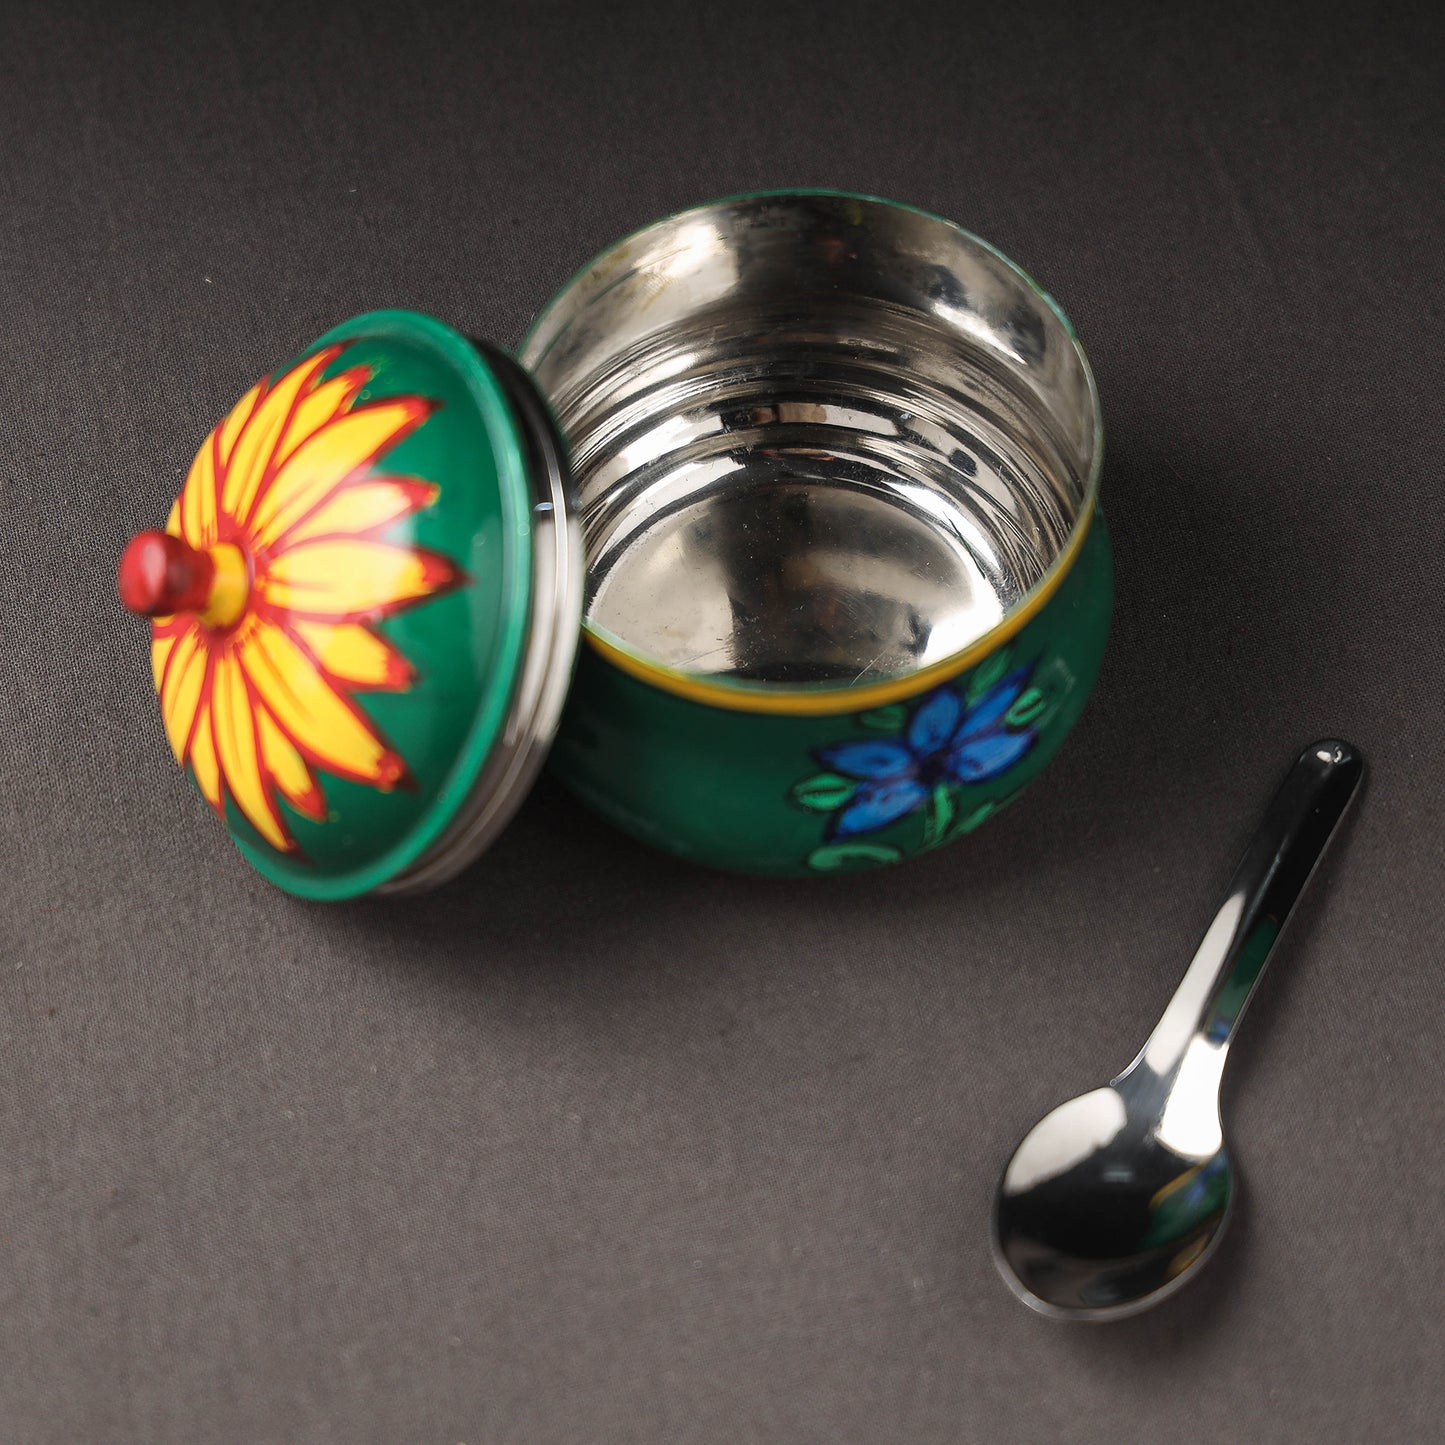 Kavad Handpainted Stainless Steel Ghee Pot with Spoon (250ml)